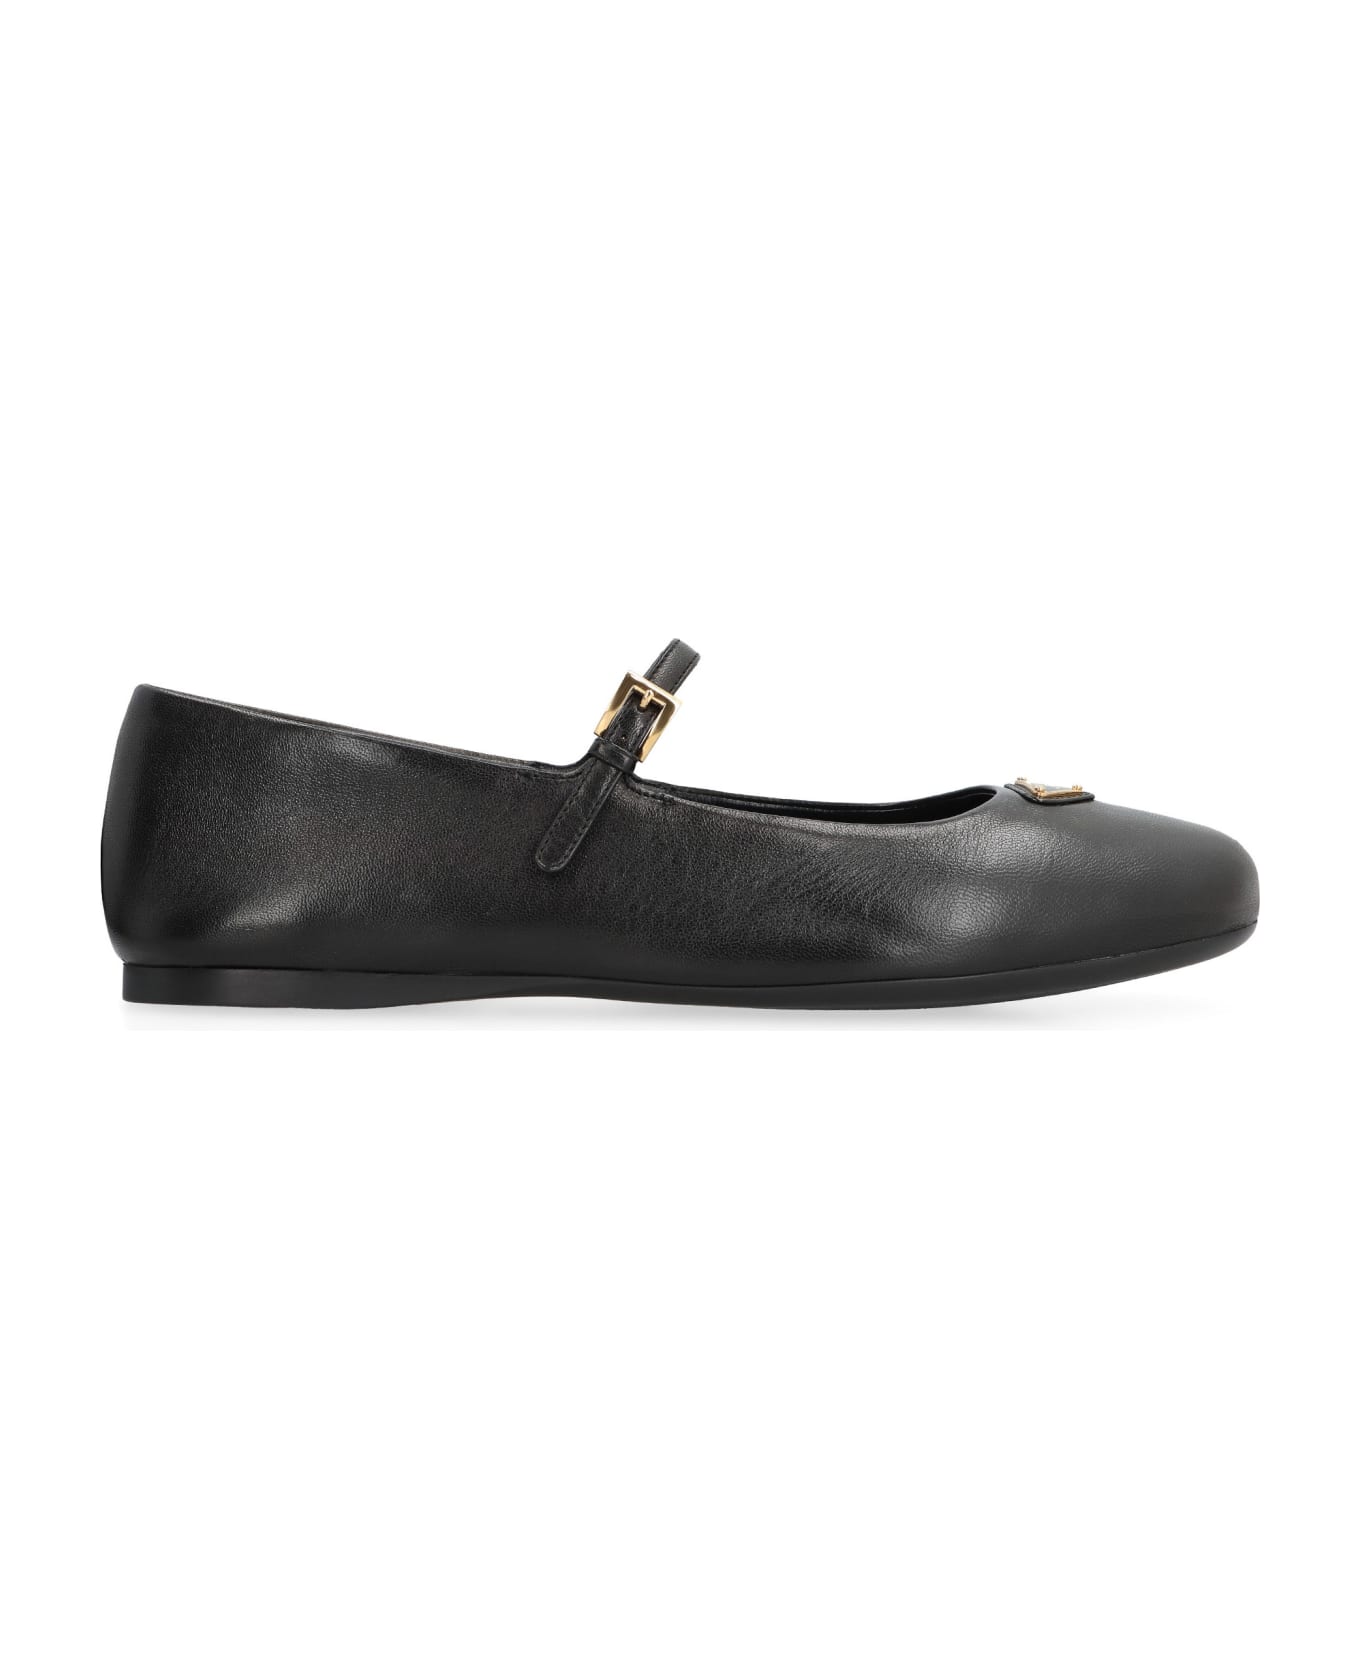 Prada Leather Ballet Flats - black